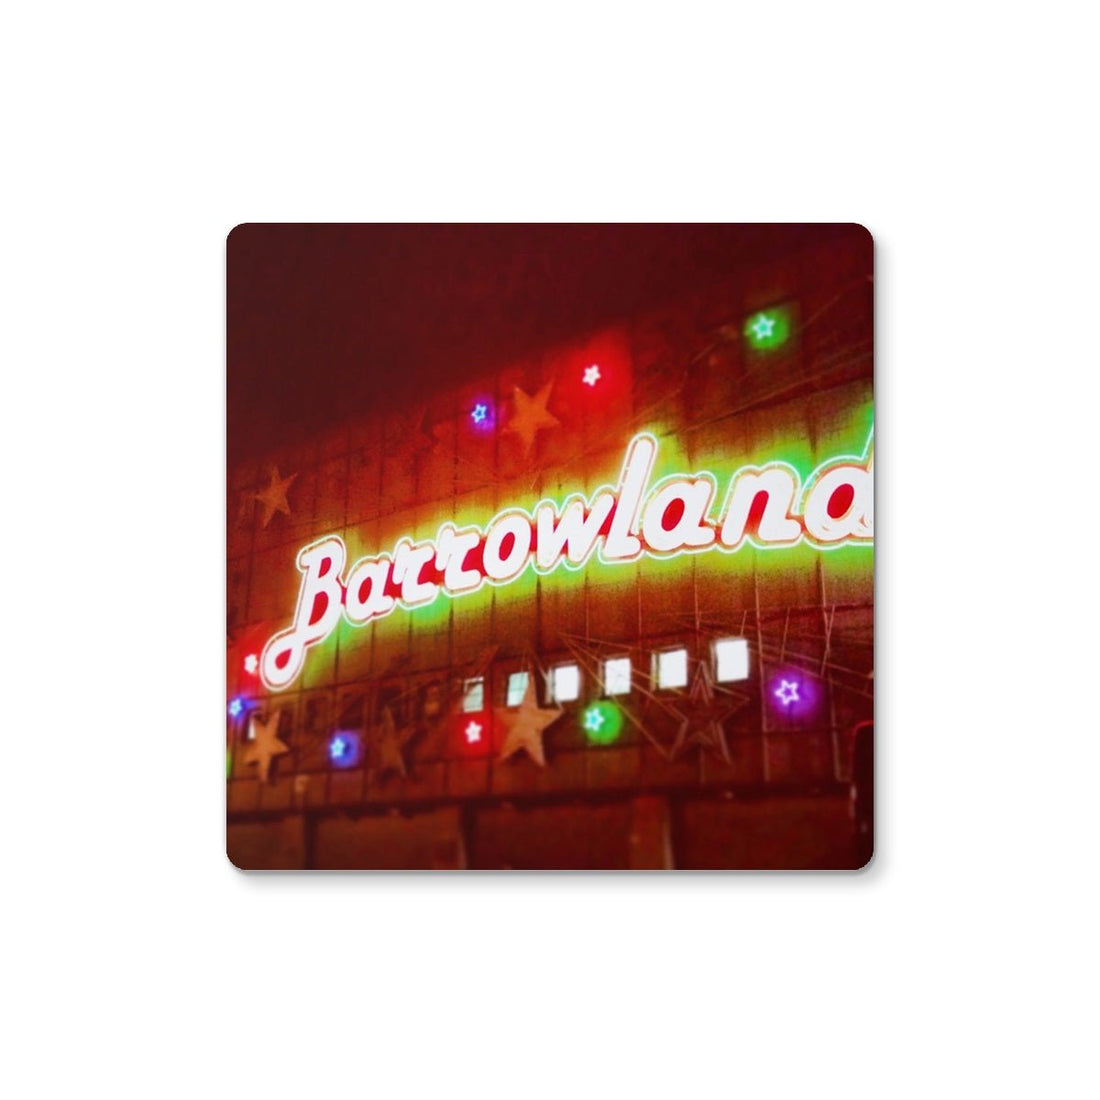 A Neon Glasgow Barrowlands Art Gifts Coaster Scotland